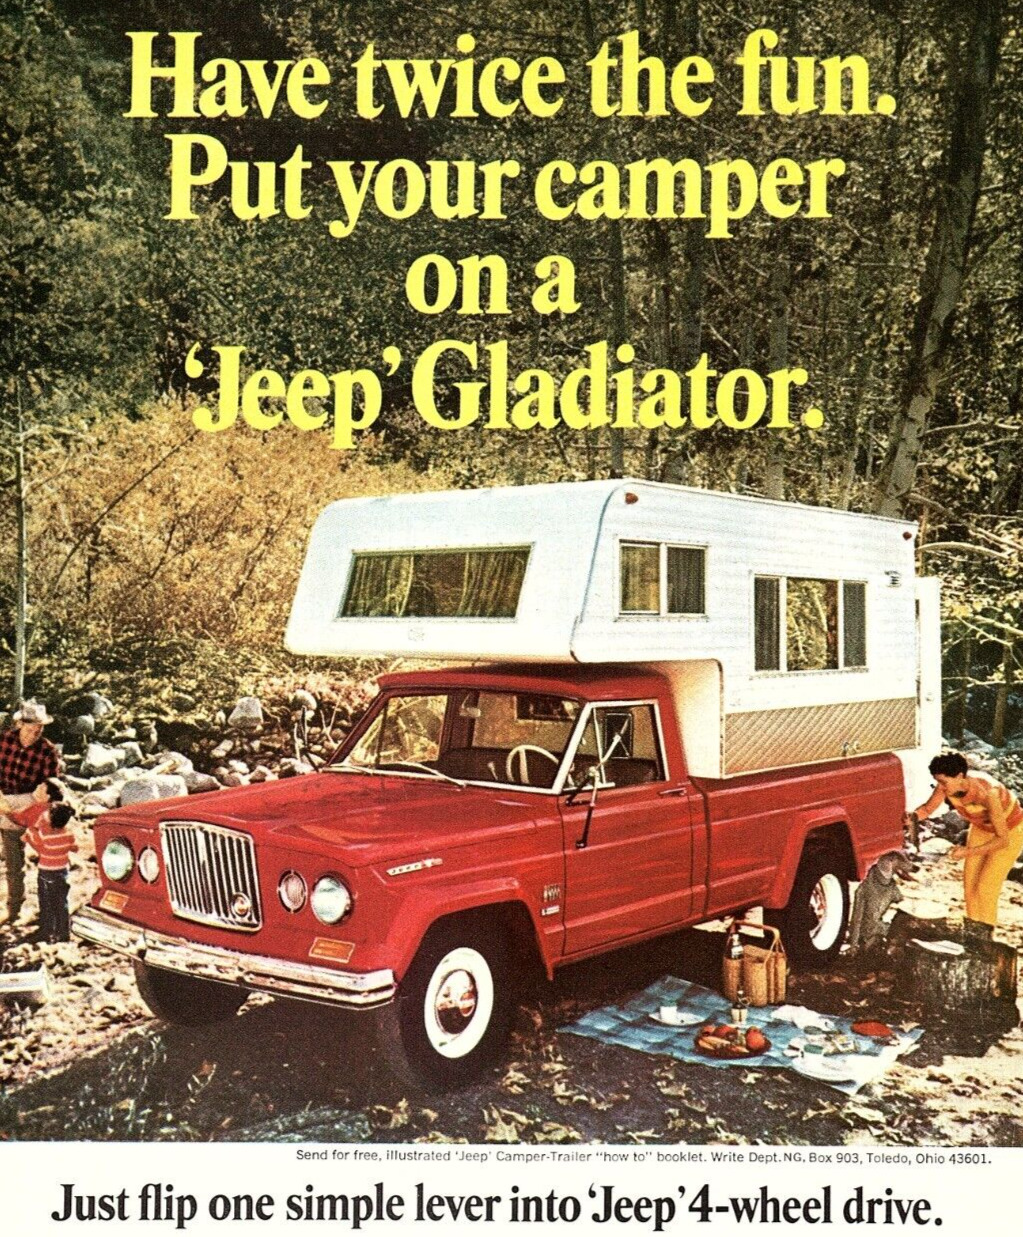 1966 JEEP GLADIATOR 4-WHEEL DRIVE CAMPER TRUCK VINTAGE ADVERTISEMENT Z1340